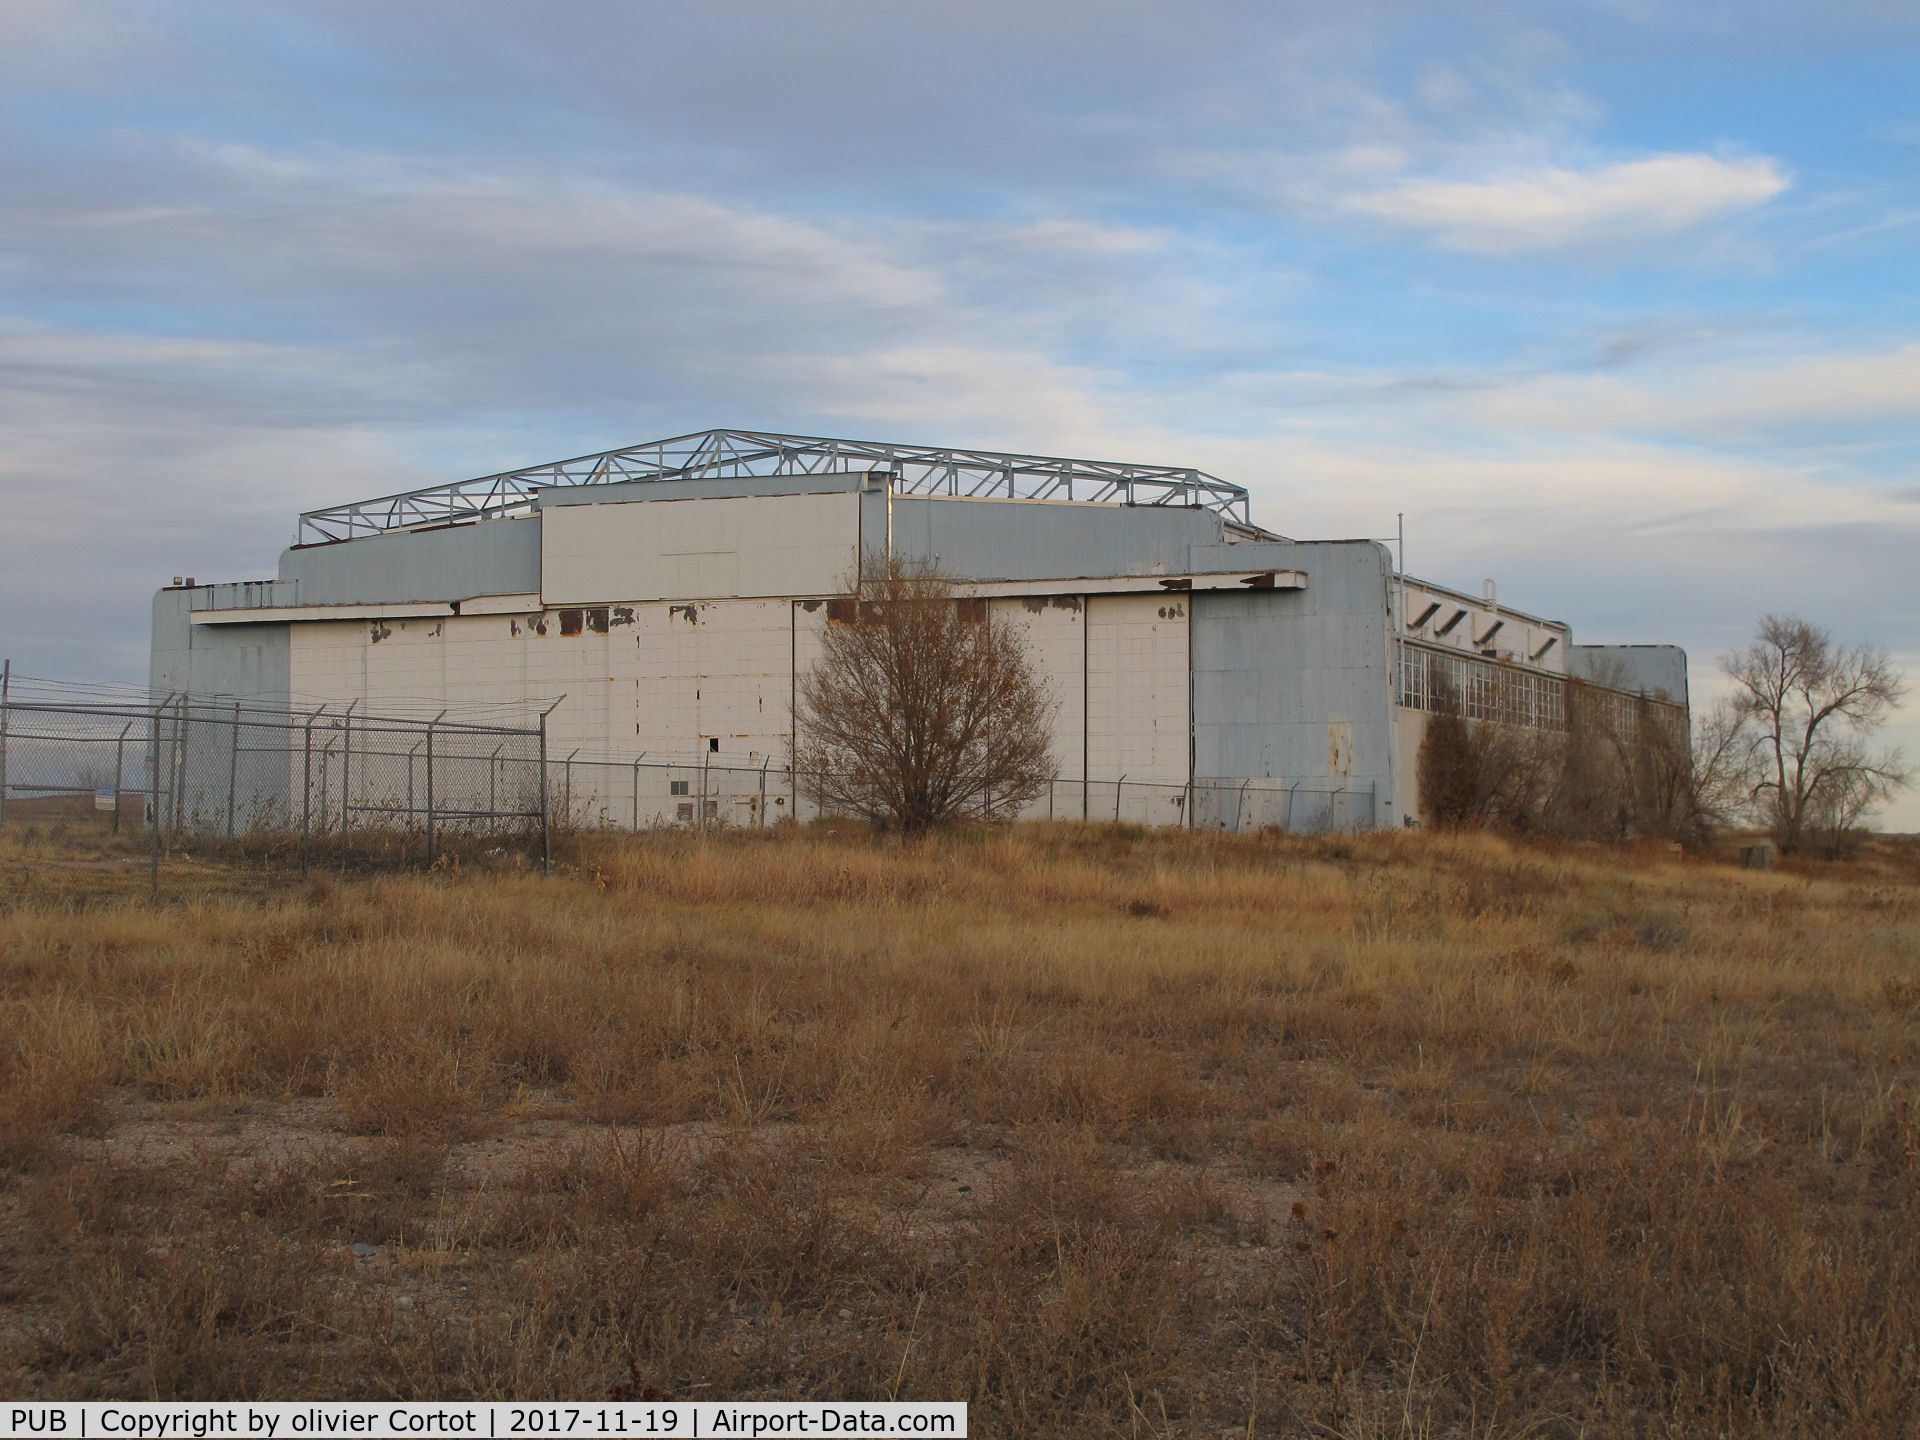 Pueblo Memorial Airport (PUB) - one of  the olds hangars on site